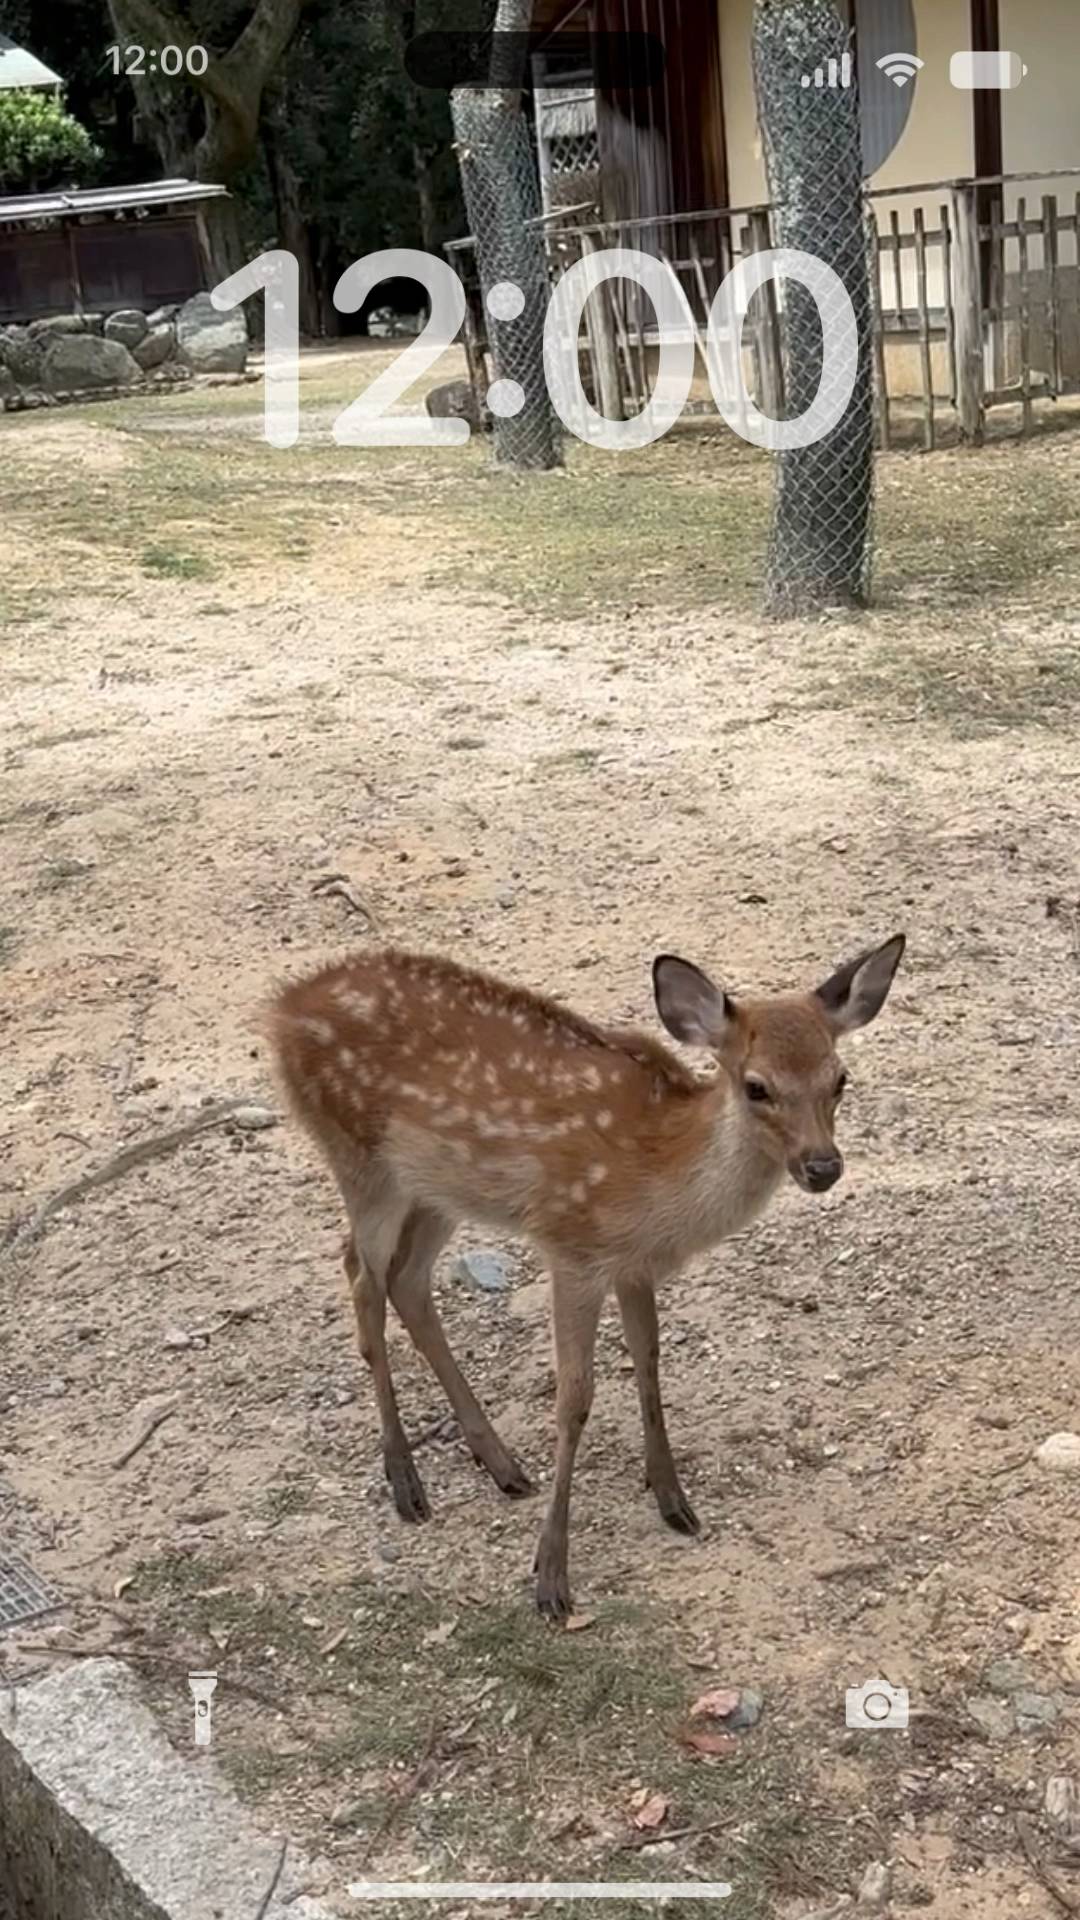 Nara cute deer 🦌🍁 Wallpaper Hidup[ltE2WDsbyYP7yruGvDEu]